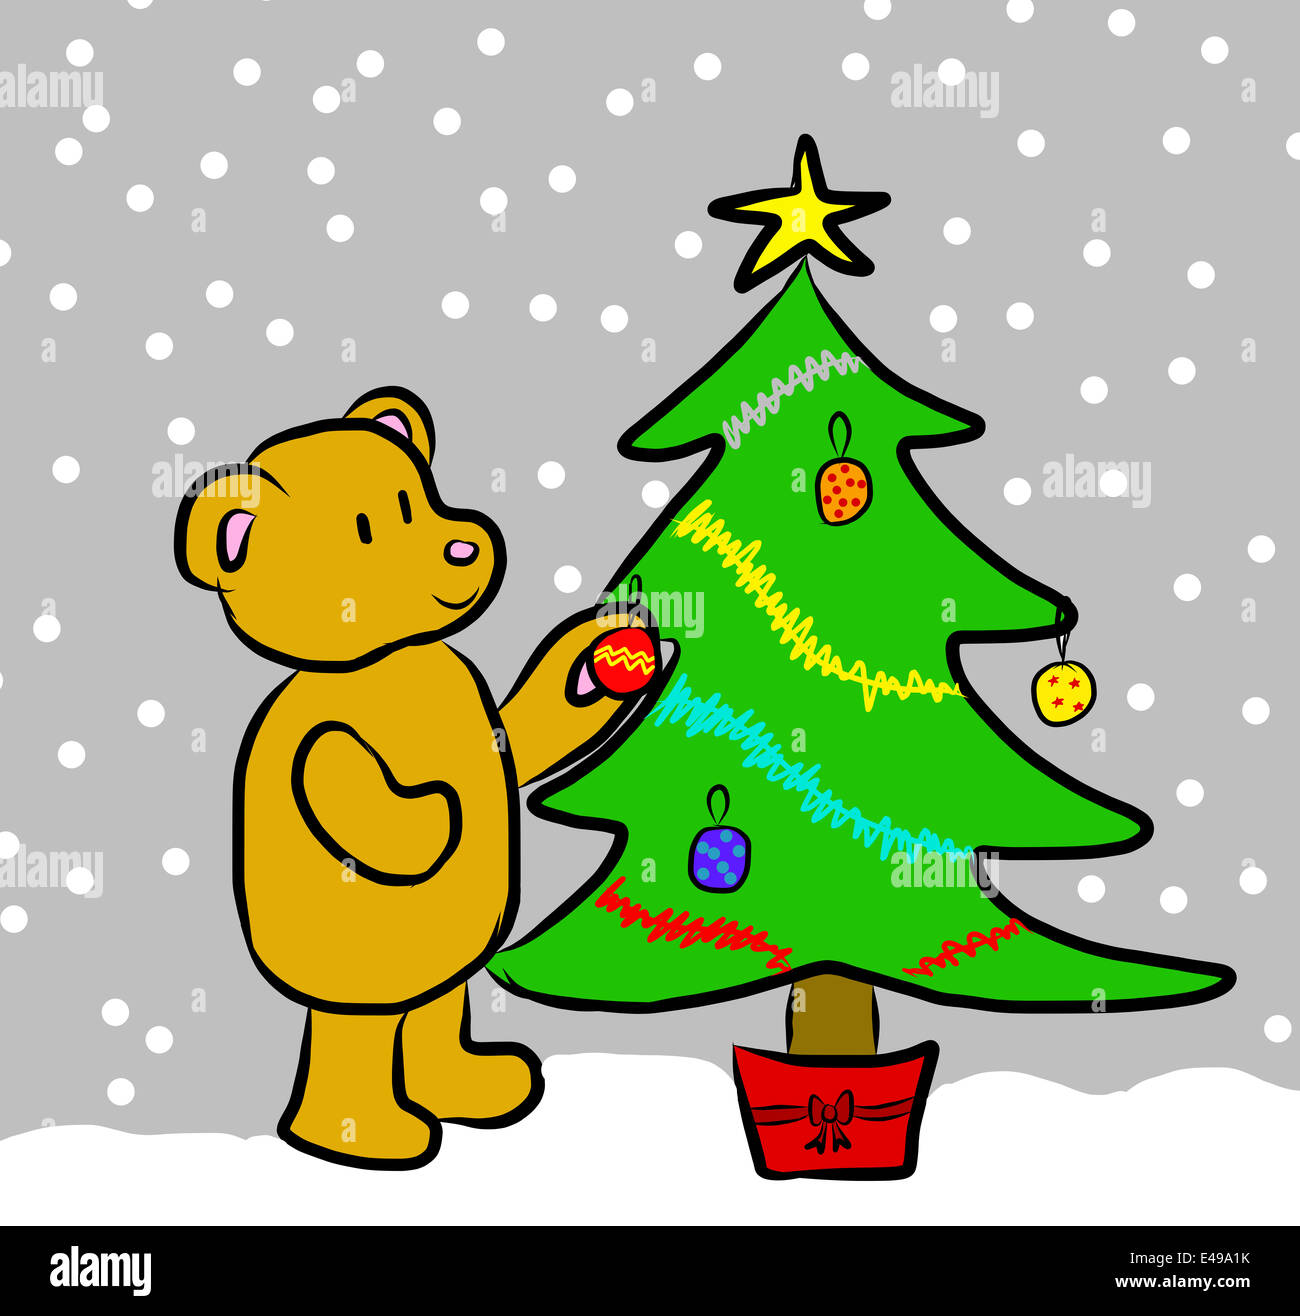 Illustration of a teddy bear decorating a Christmas Tree Stock Photo